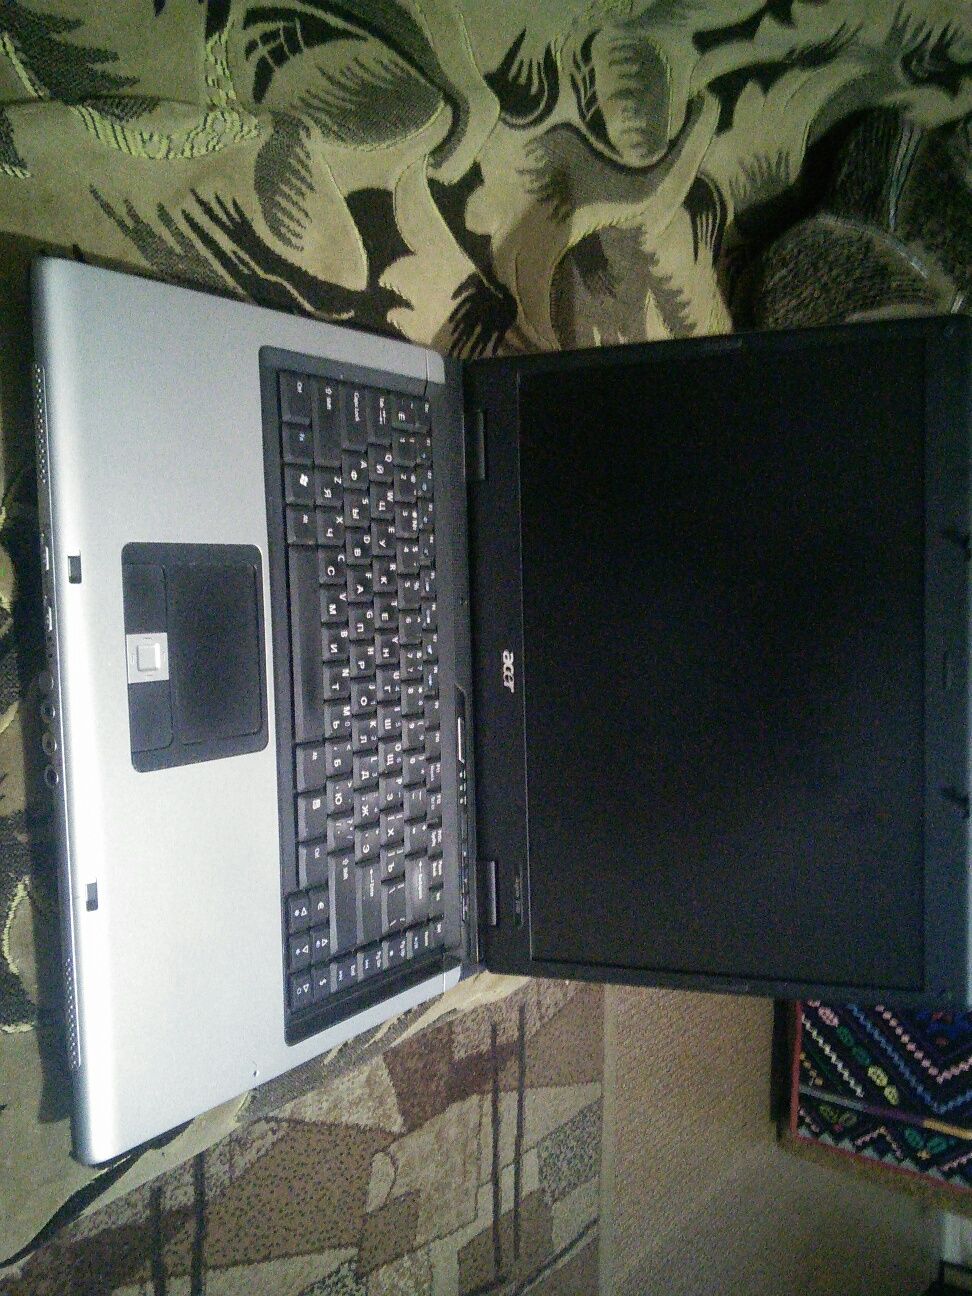 Ноутбук Acer Aspire 5100